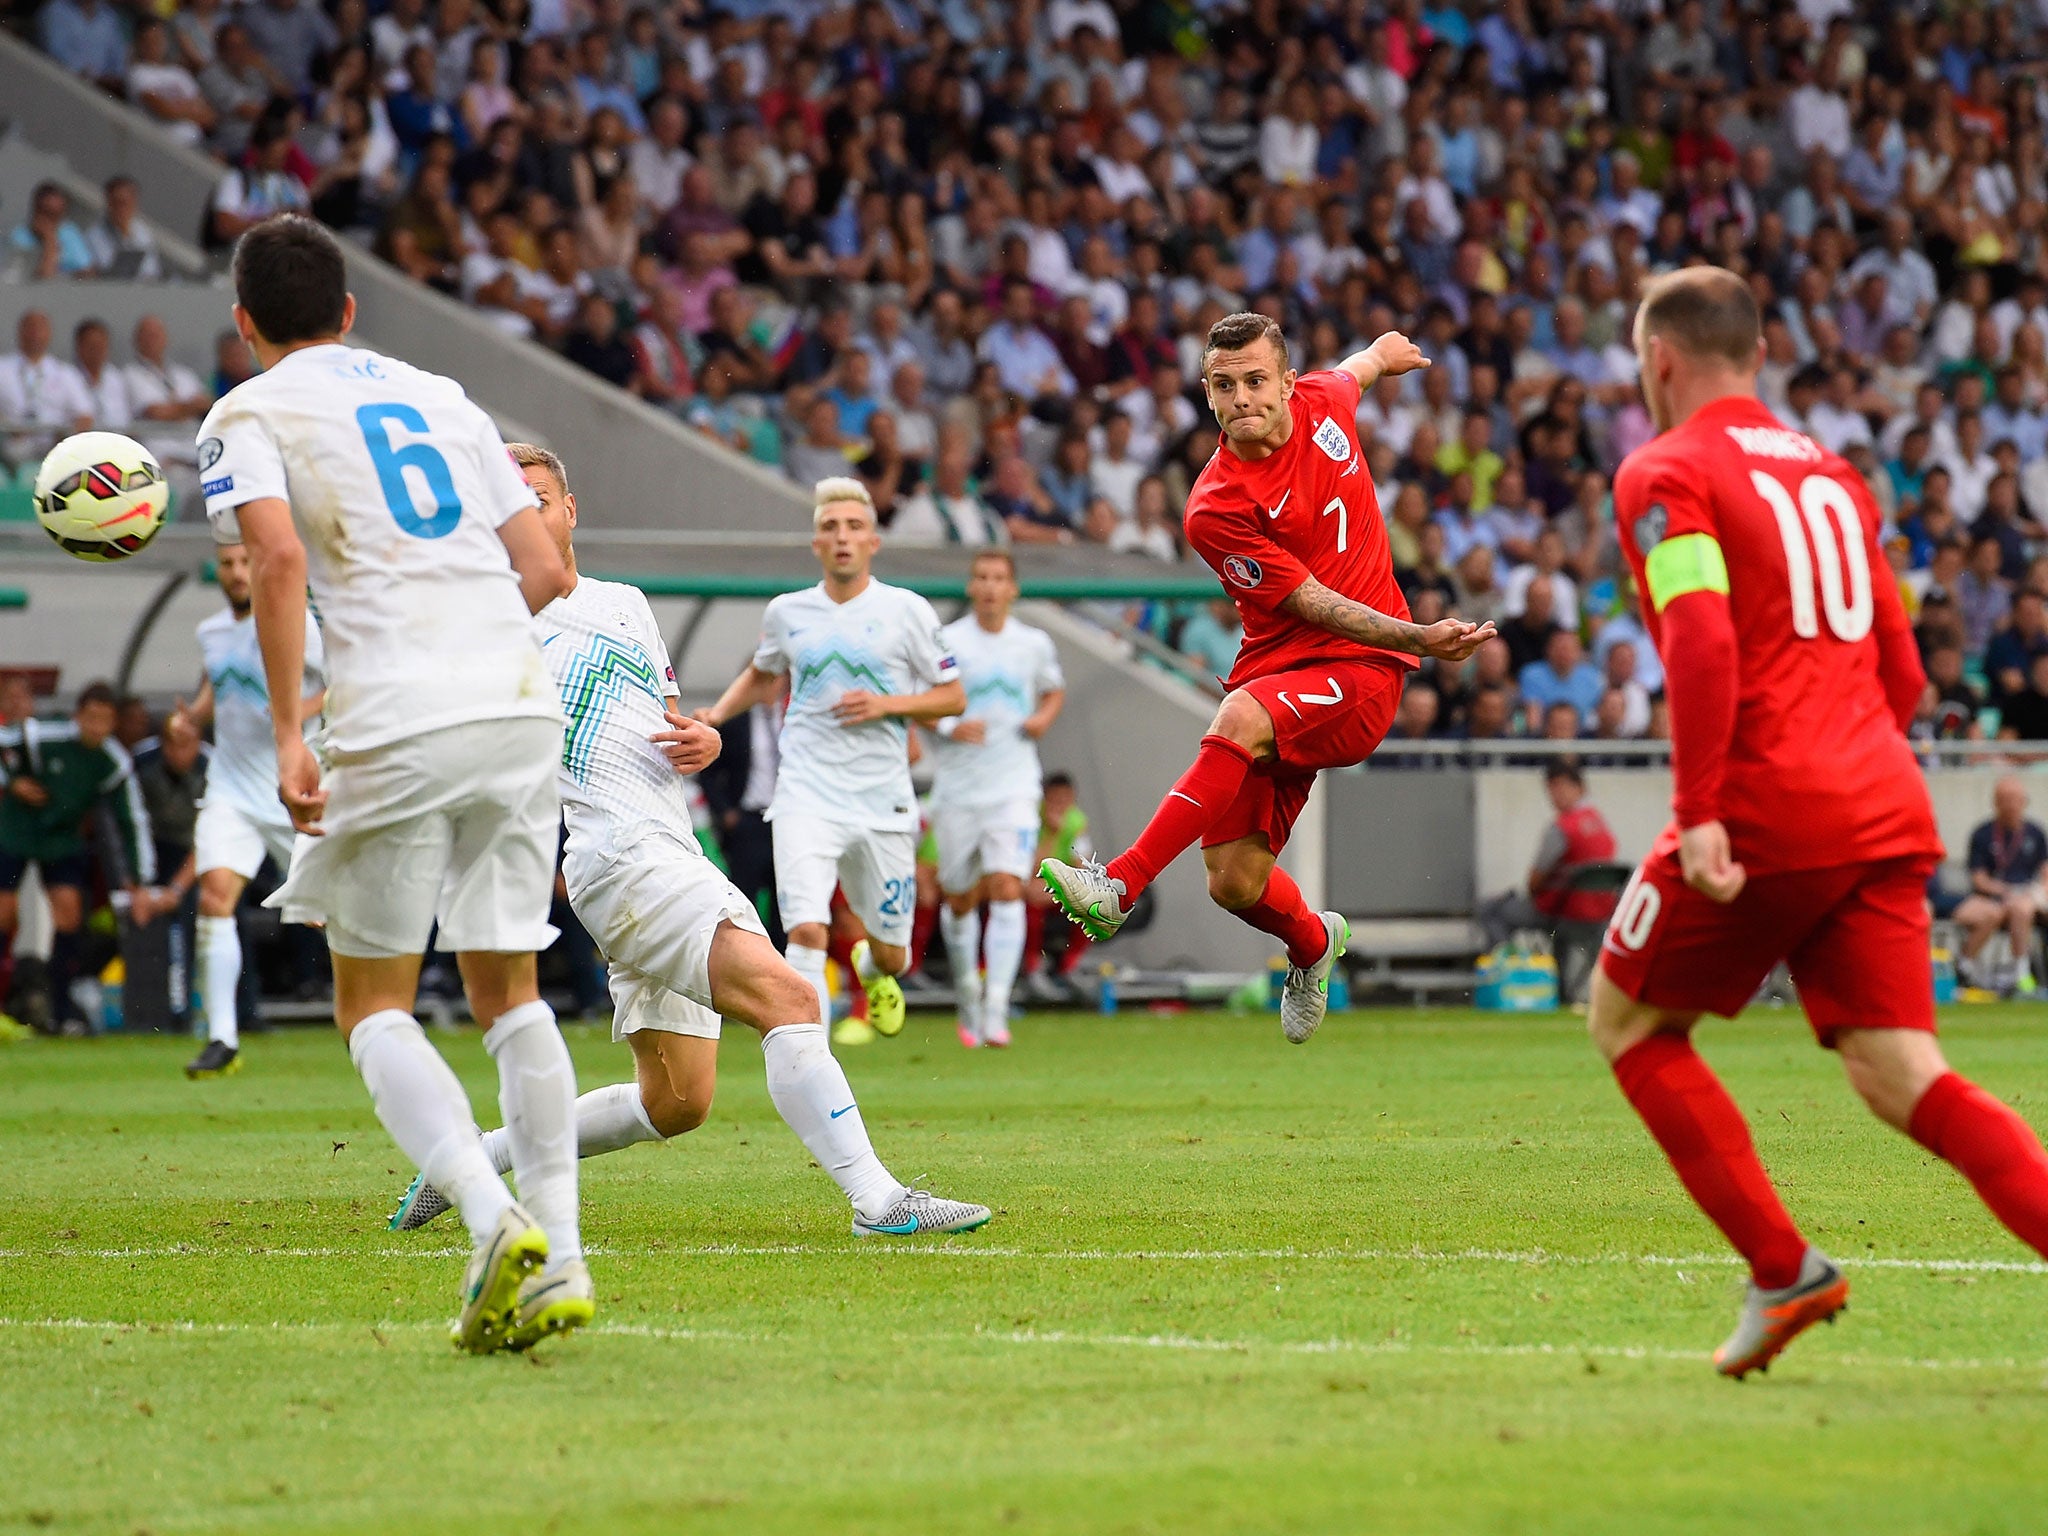 Wilshere scored two stunning goals for England